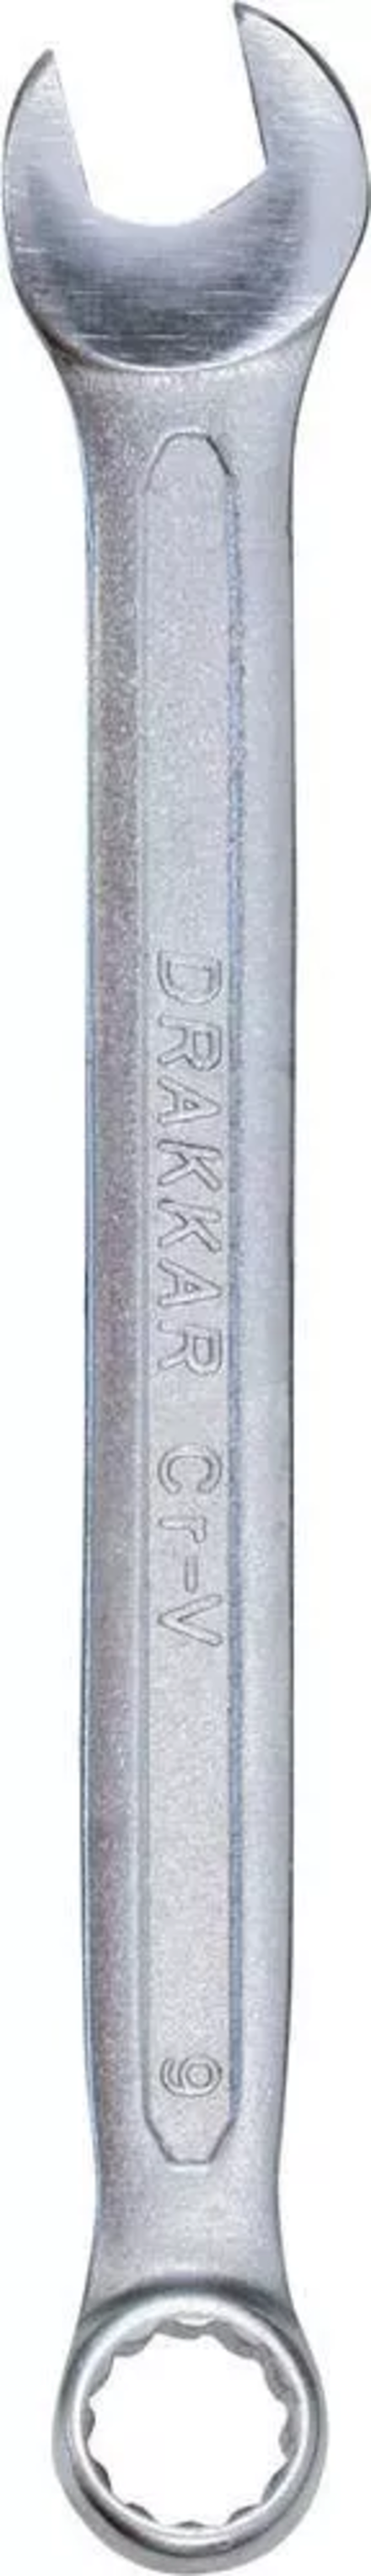 Cle mixte tete polie 9mm DRAKKAR TOOLS - 13759